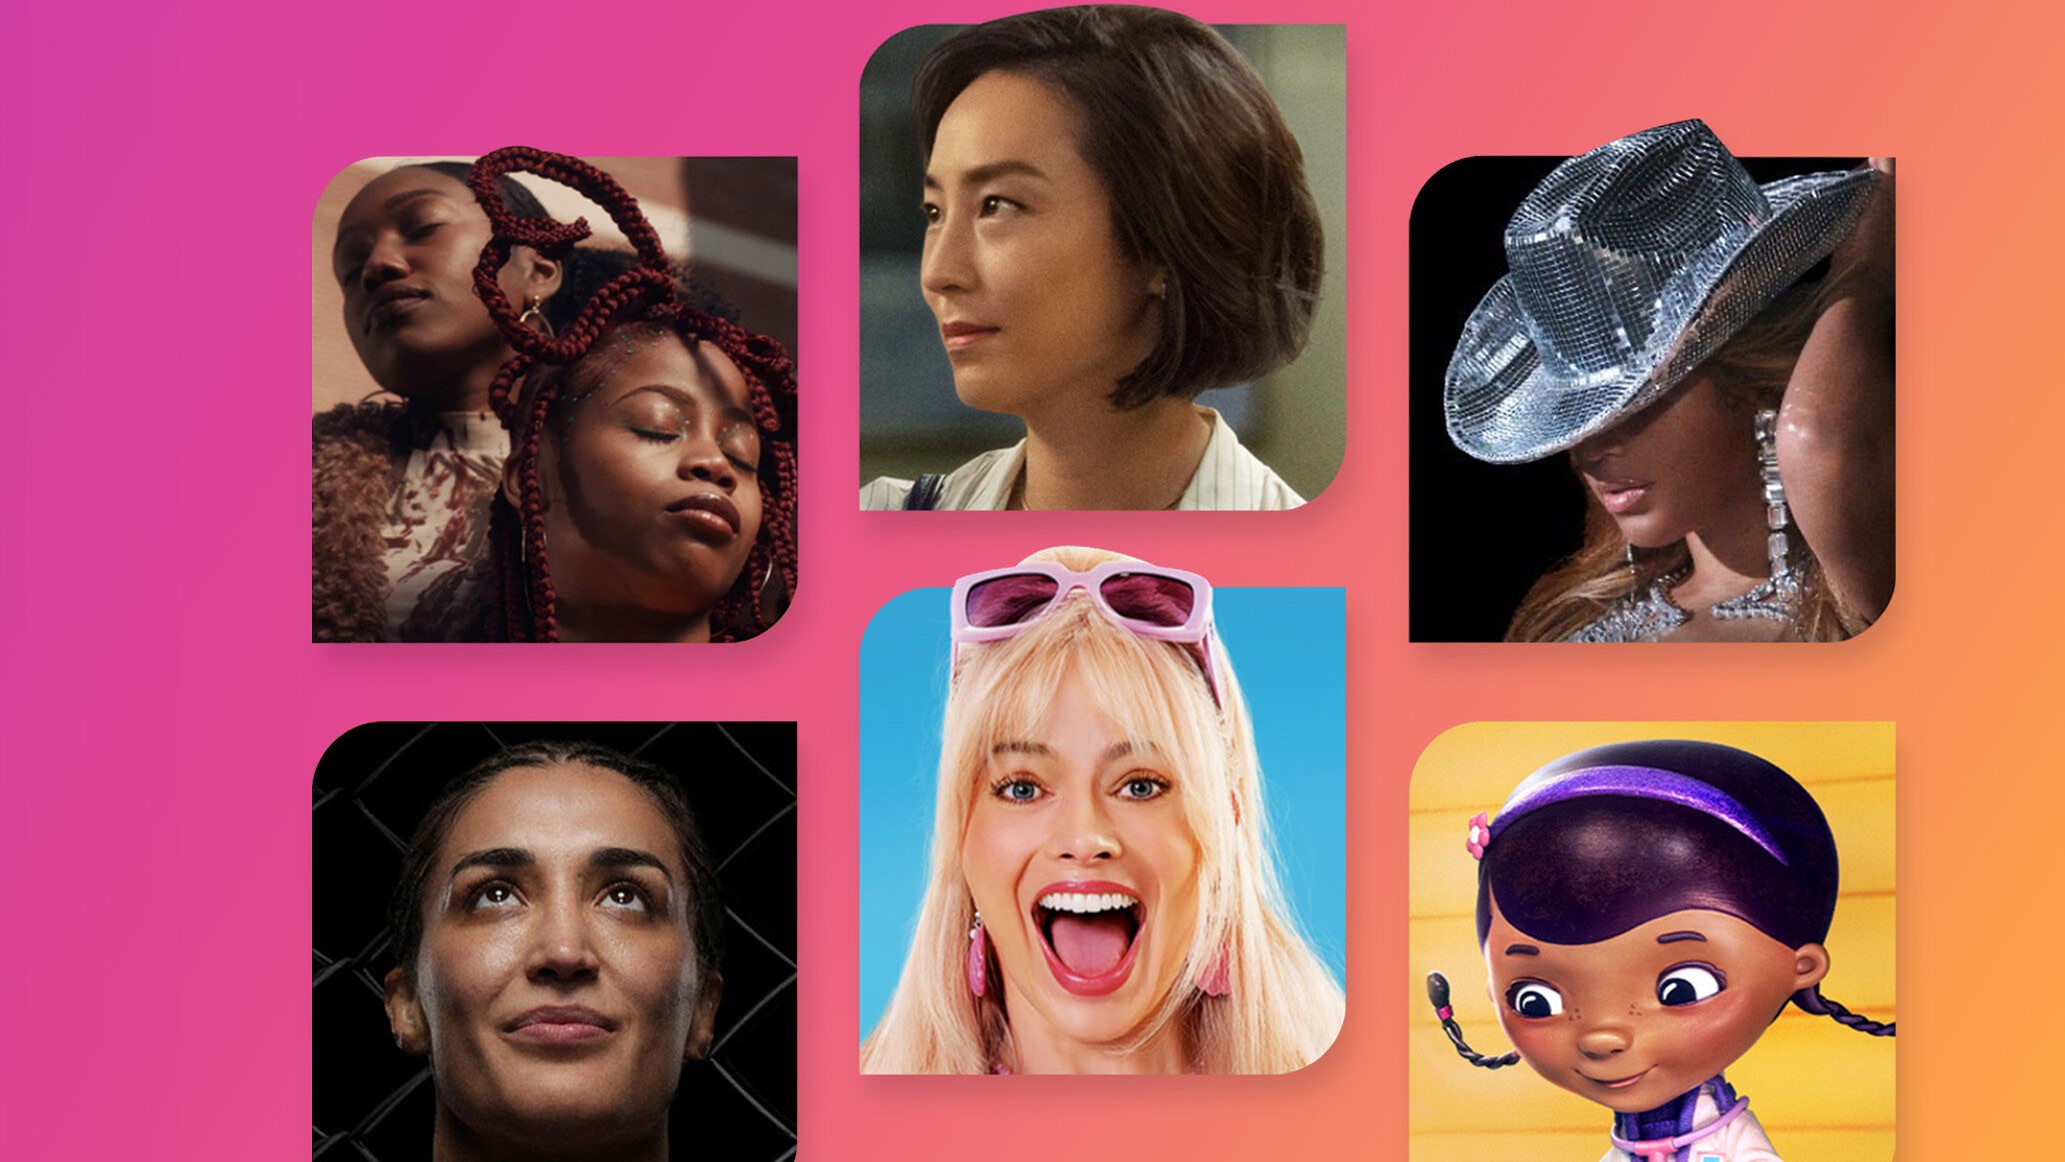 Comcast Celebrates Women’s History Month